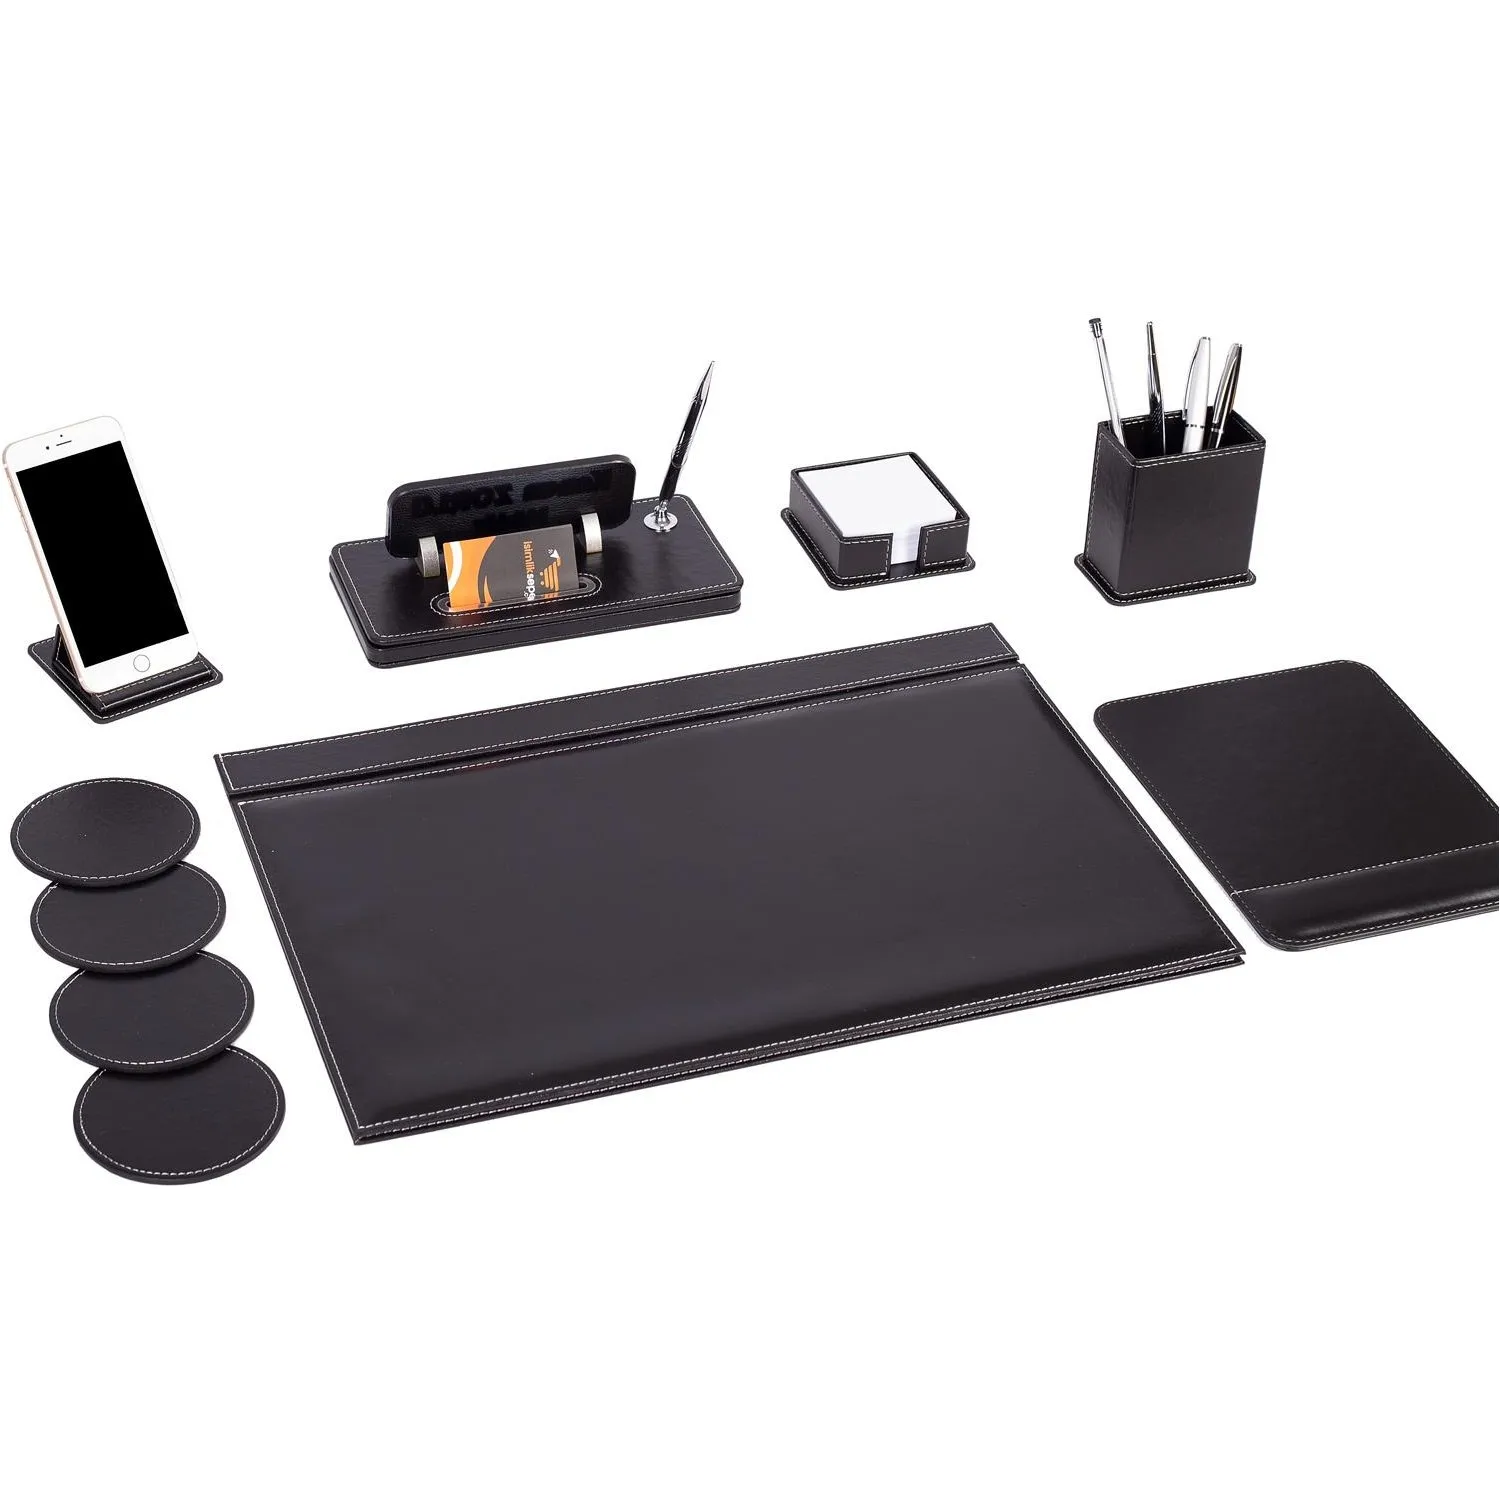 İsme Special Alaska Leather Desk Set + Leather İsimlik Simple And Plain Table Layout For Kullanışlı Often Looking Black İsimlik sepeti